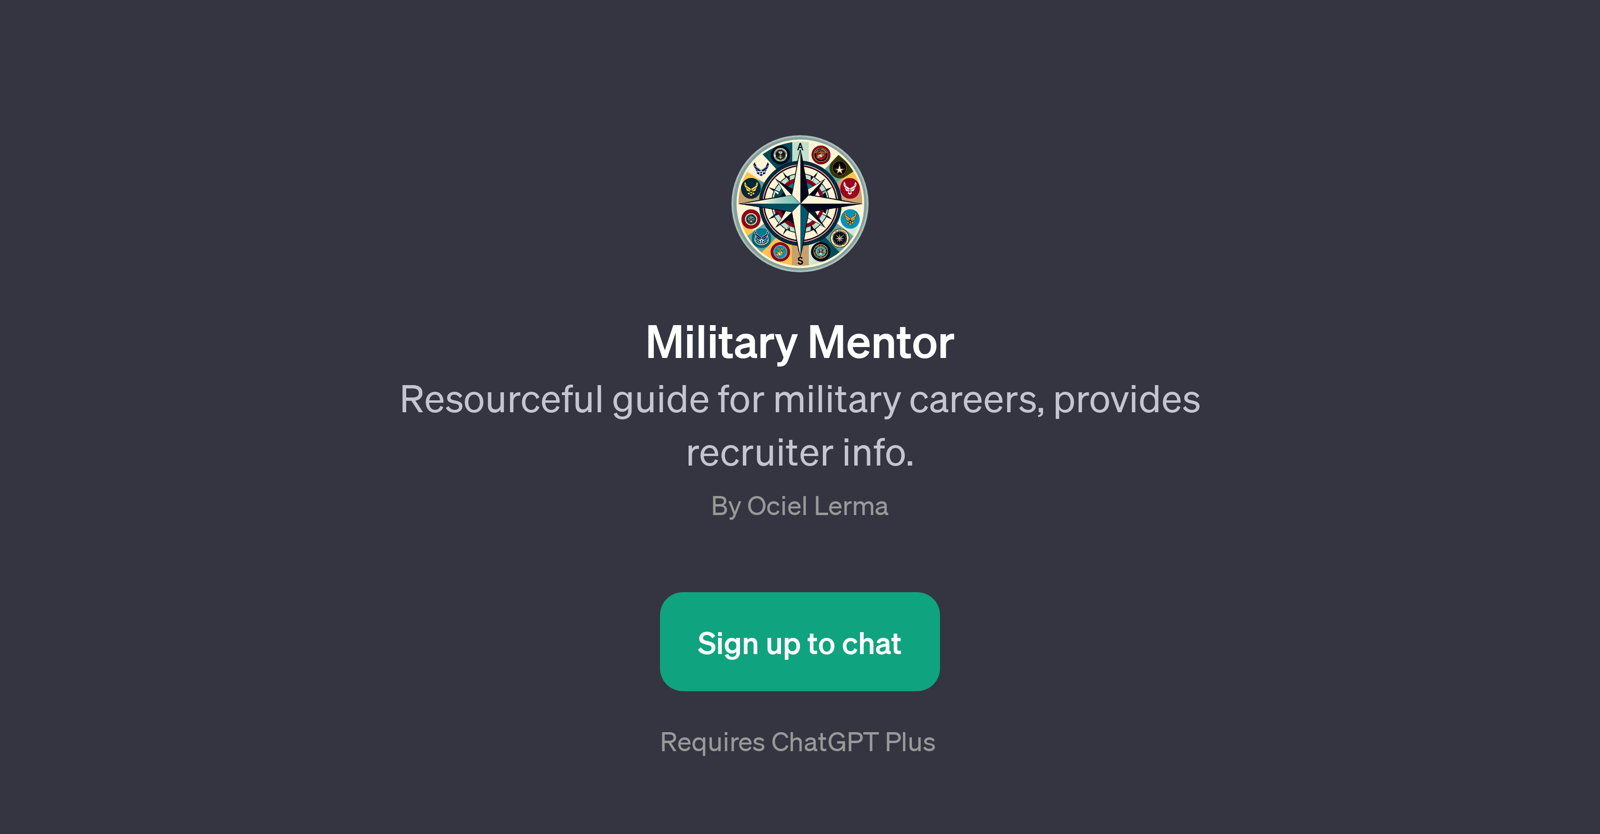 Military Mentor website